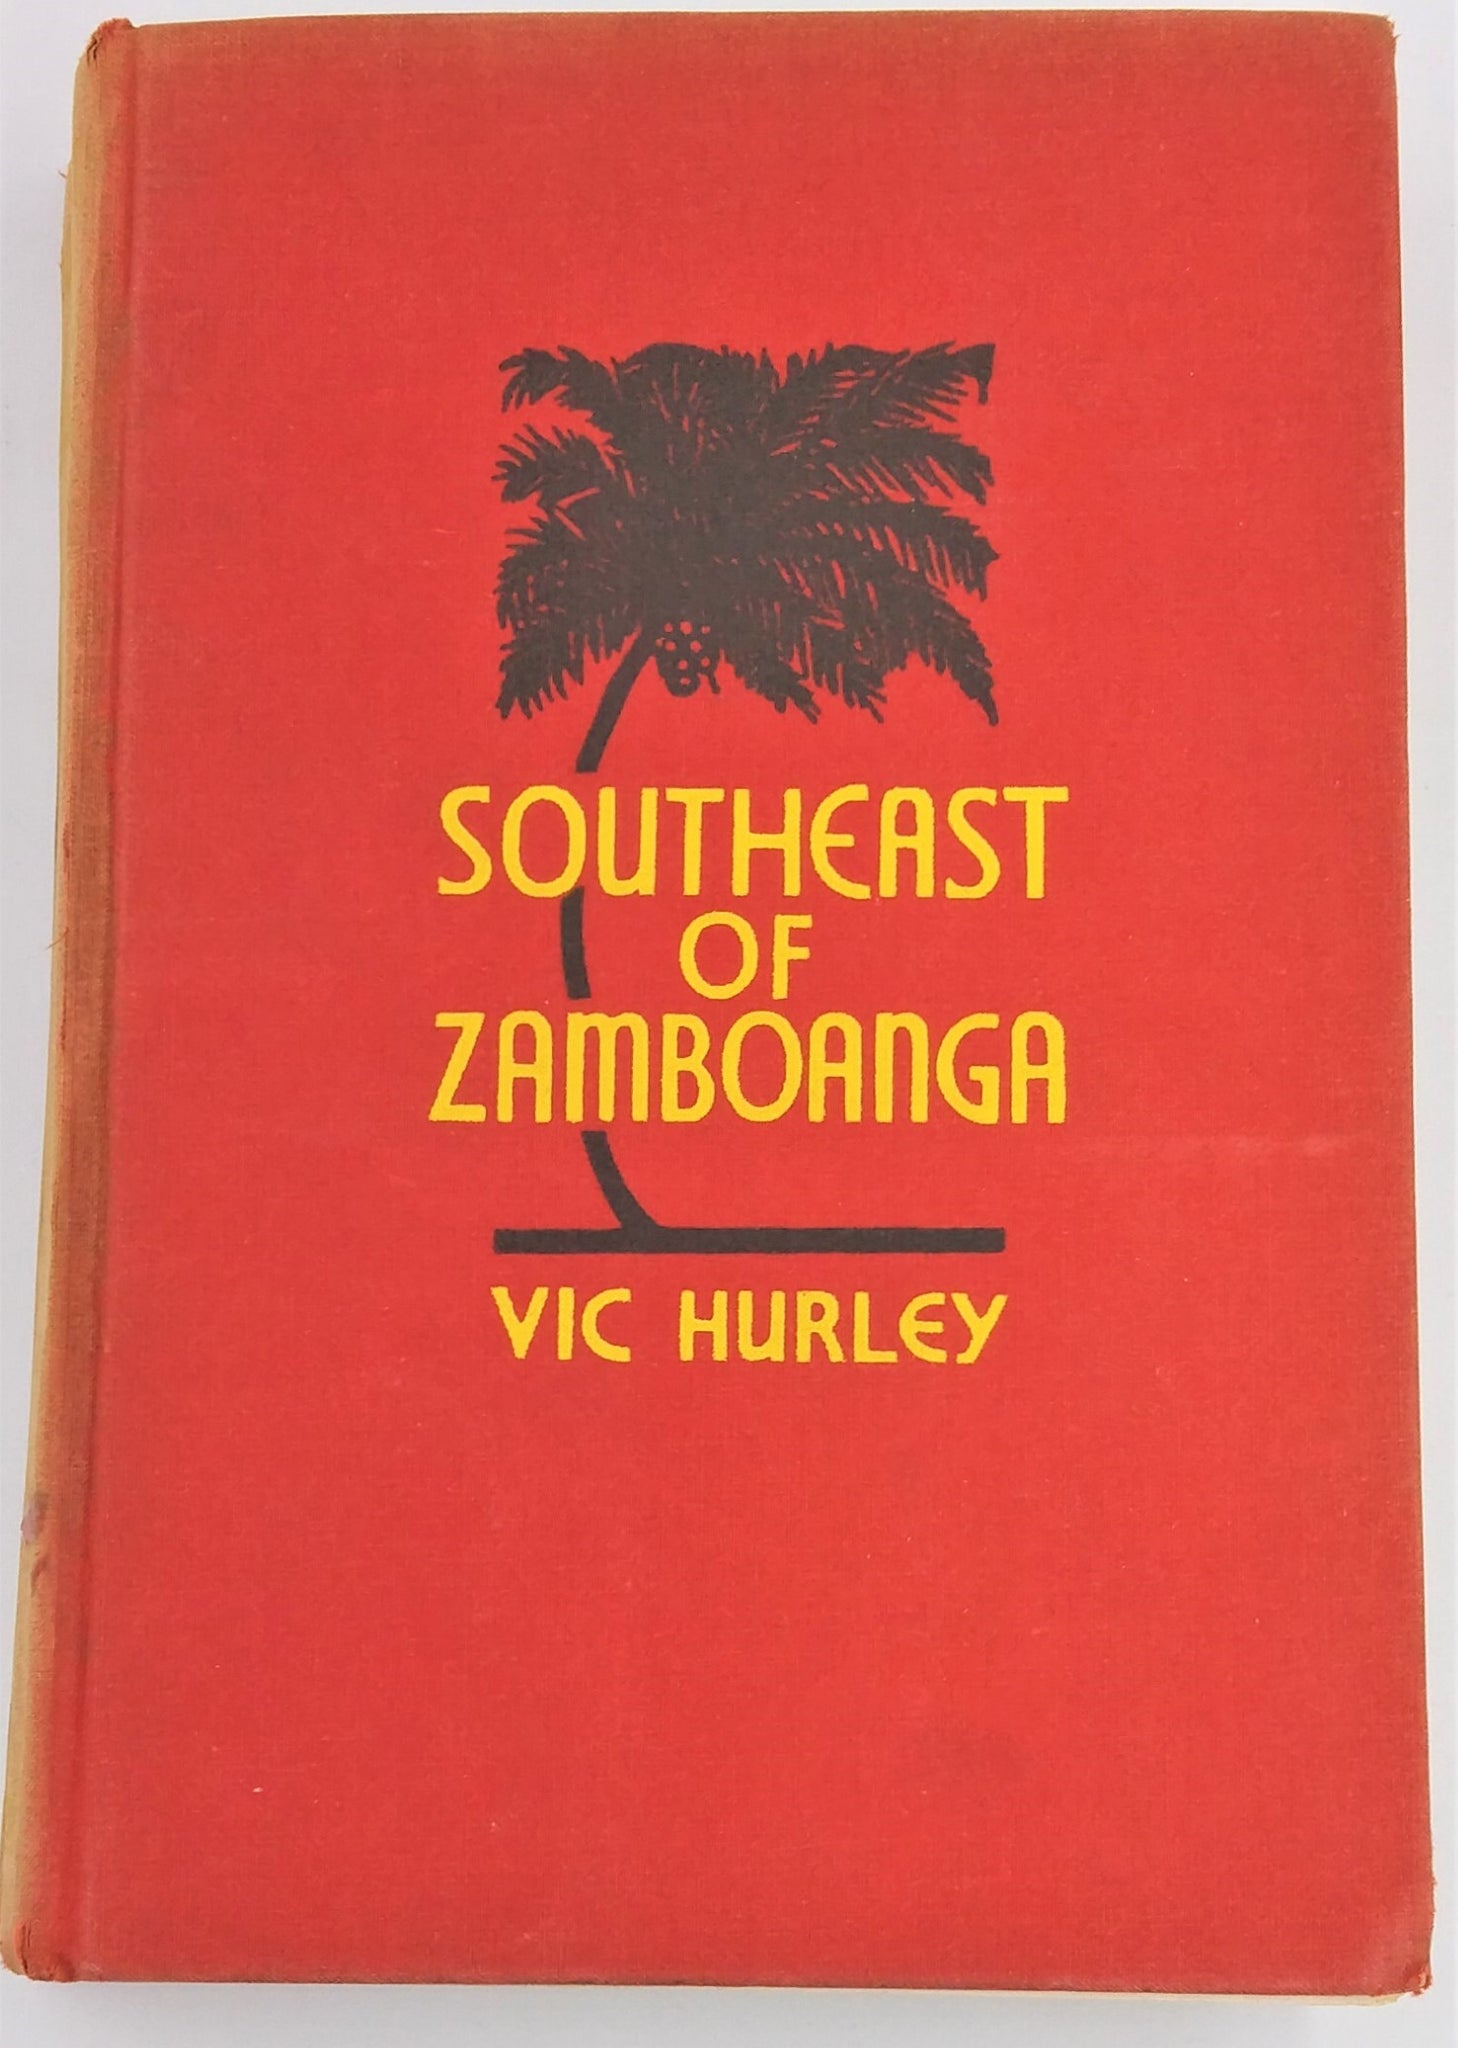 Southeast of Zamboanga by Vic Hurley